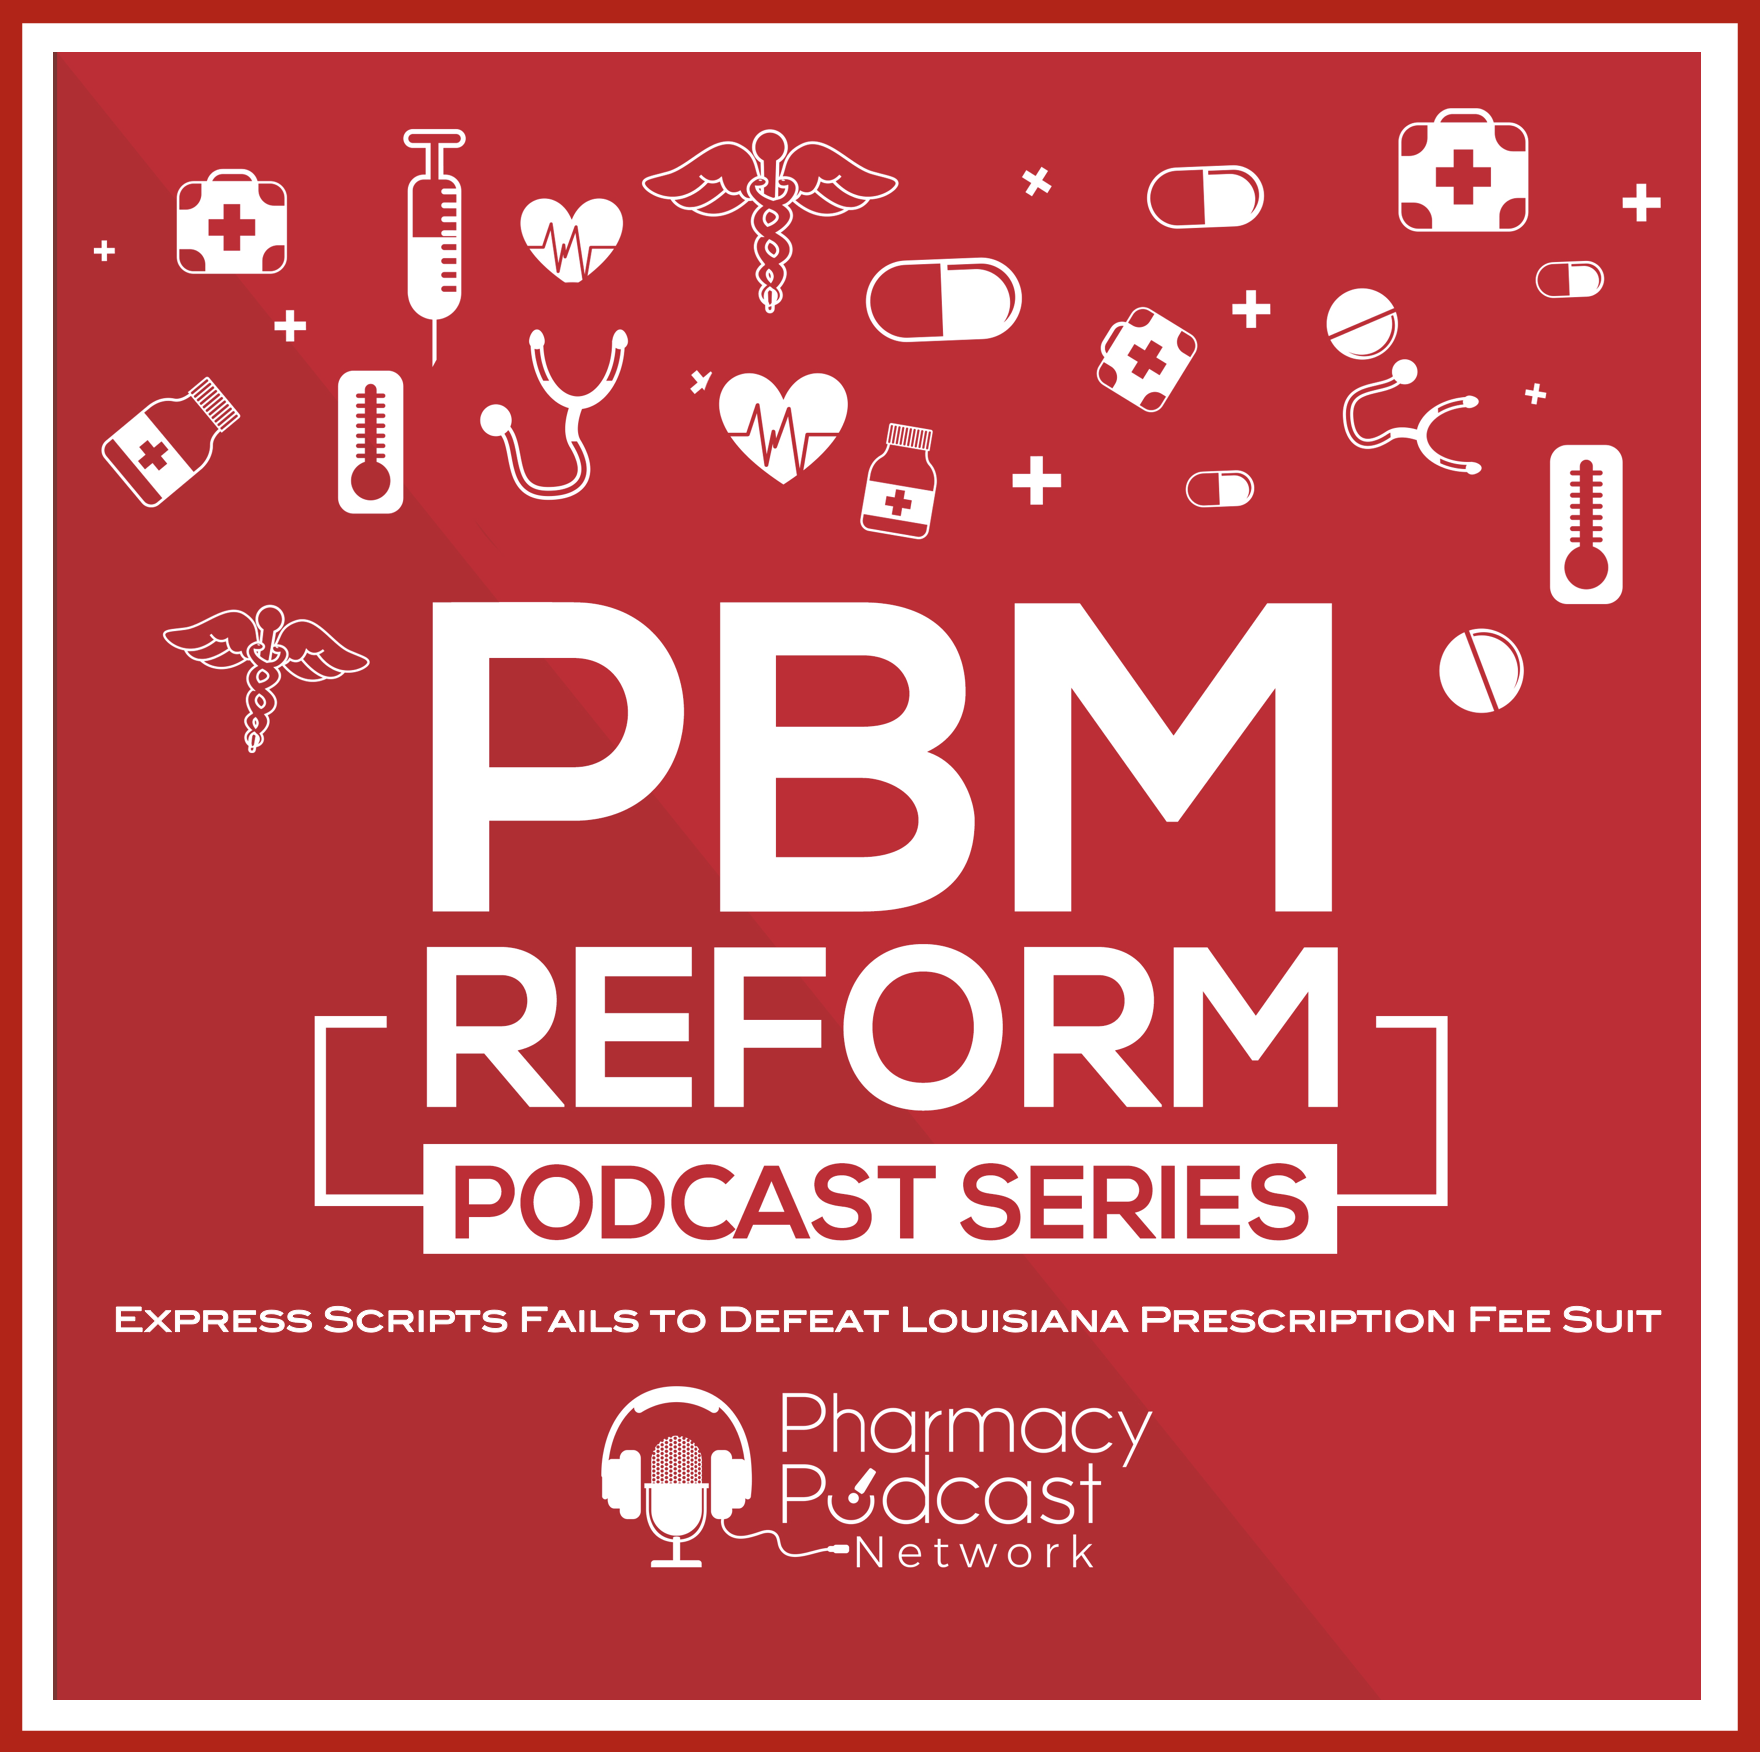 Express Scripts Fails to Defeat Louisiana Prescription Fee Suit | PBM Reform Podcast Series